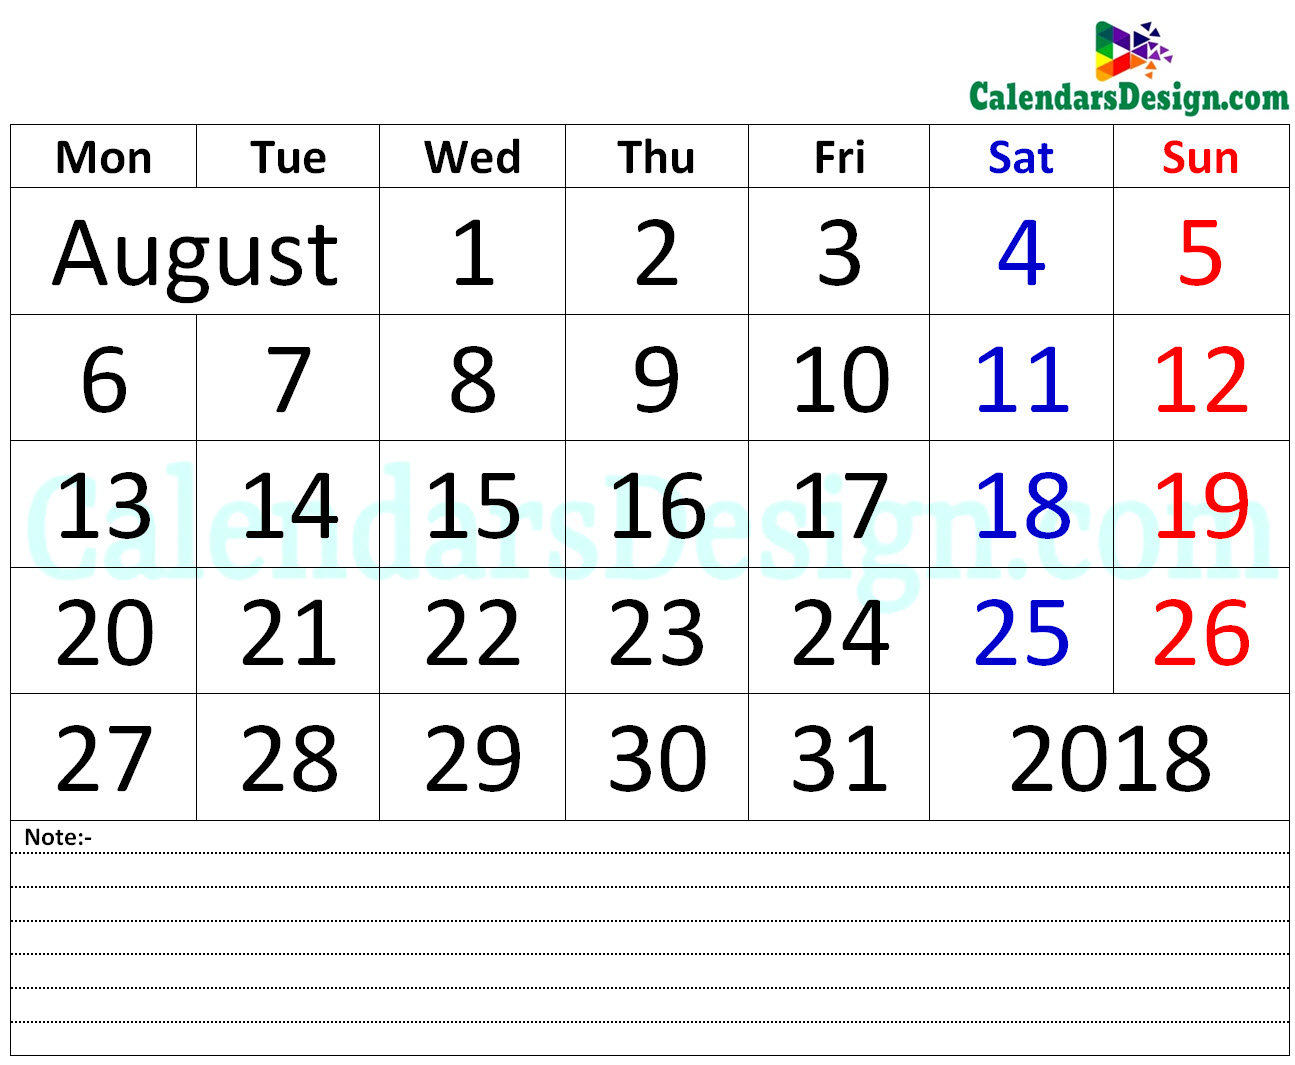 august-2018-calendar-printable